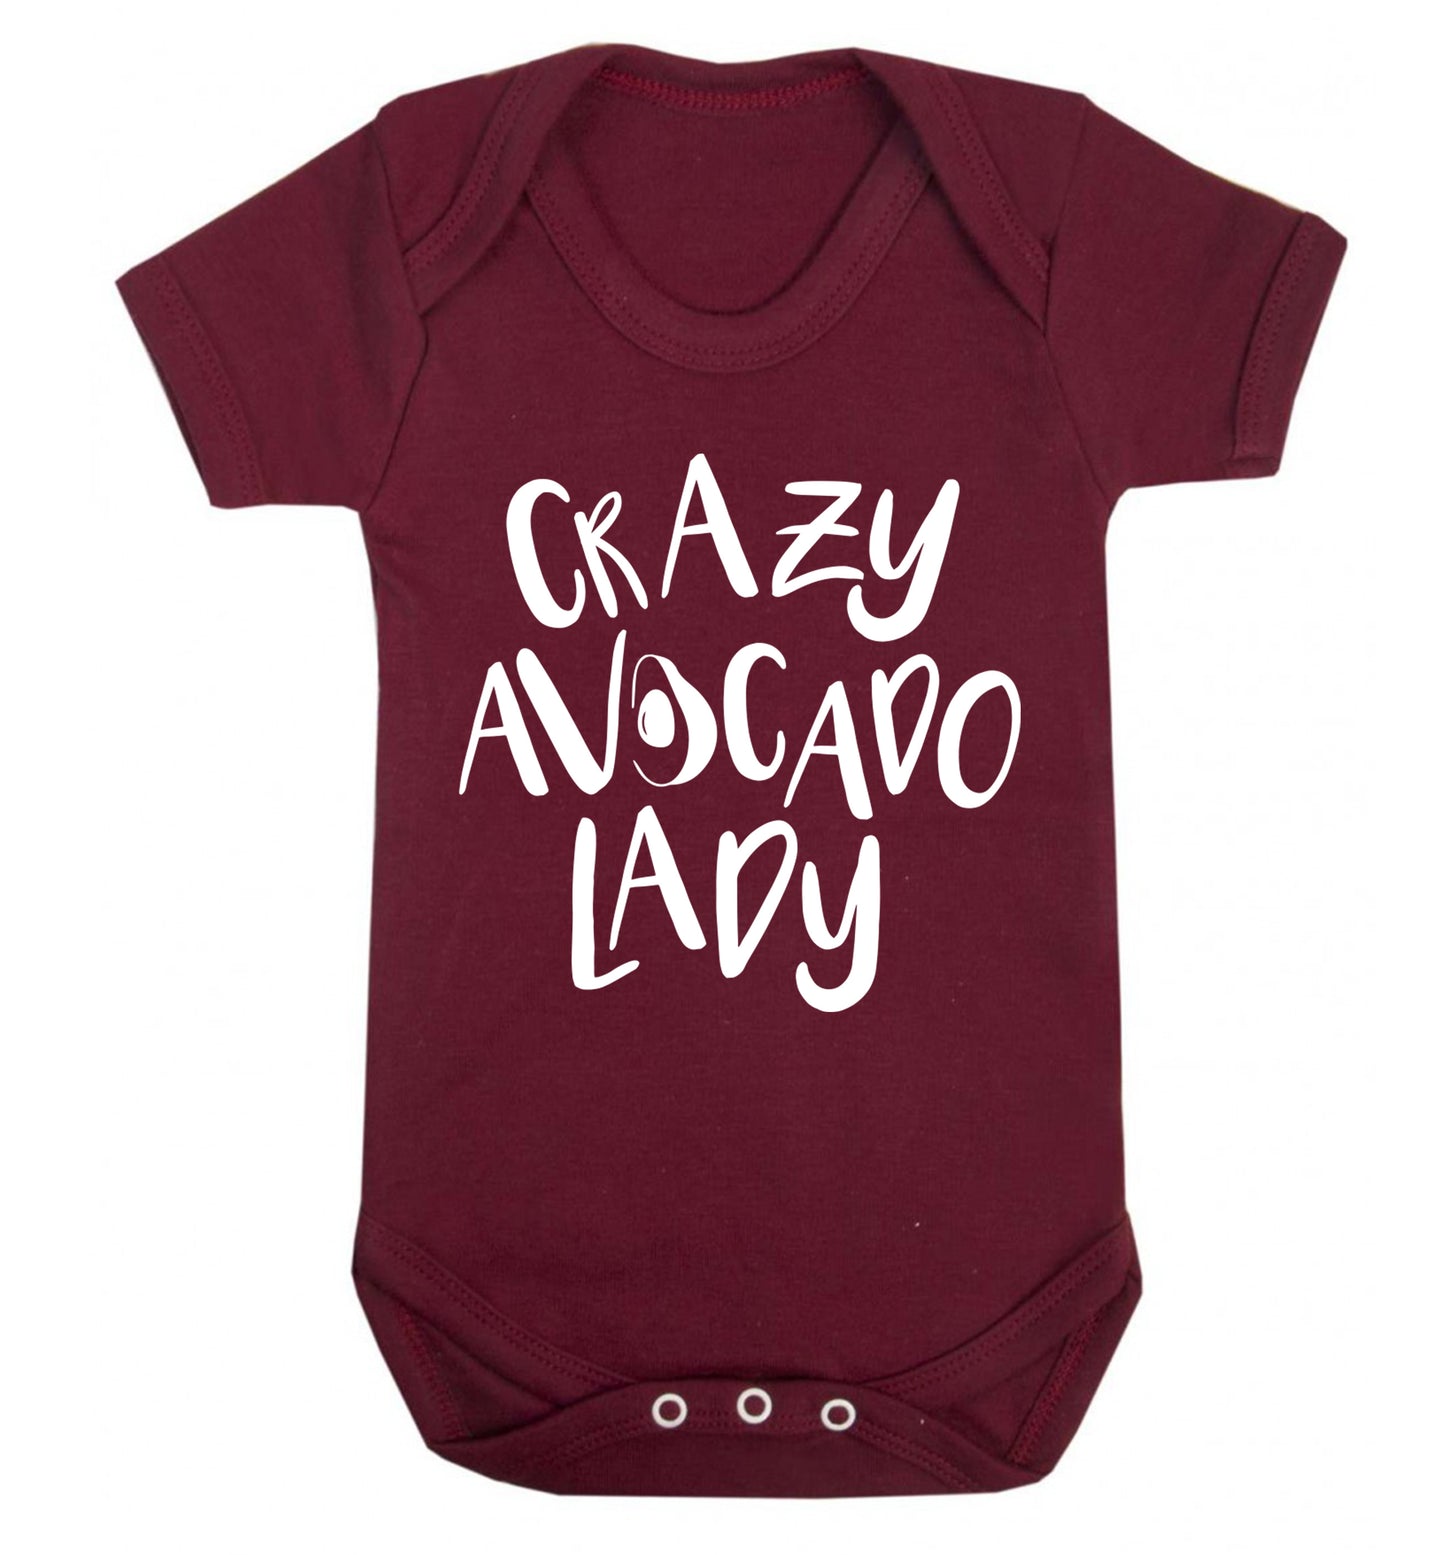 Crazy avocado lady Baby Vest maroon 18-24 months